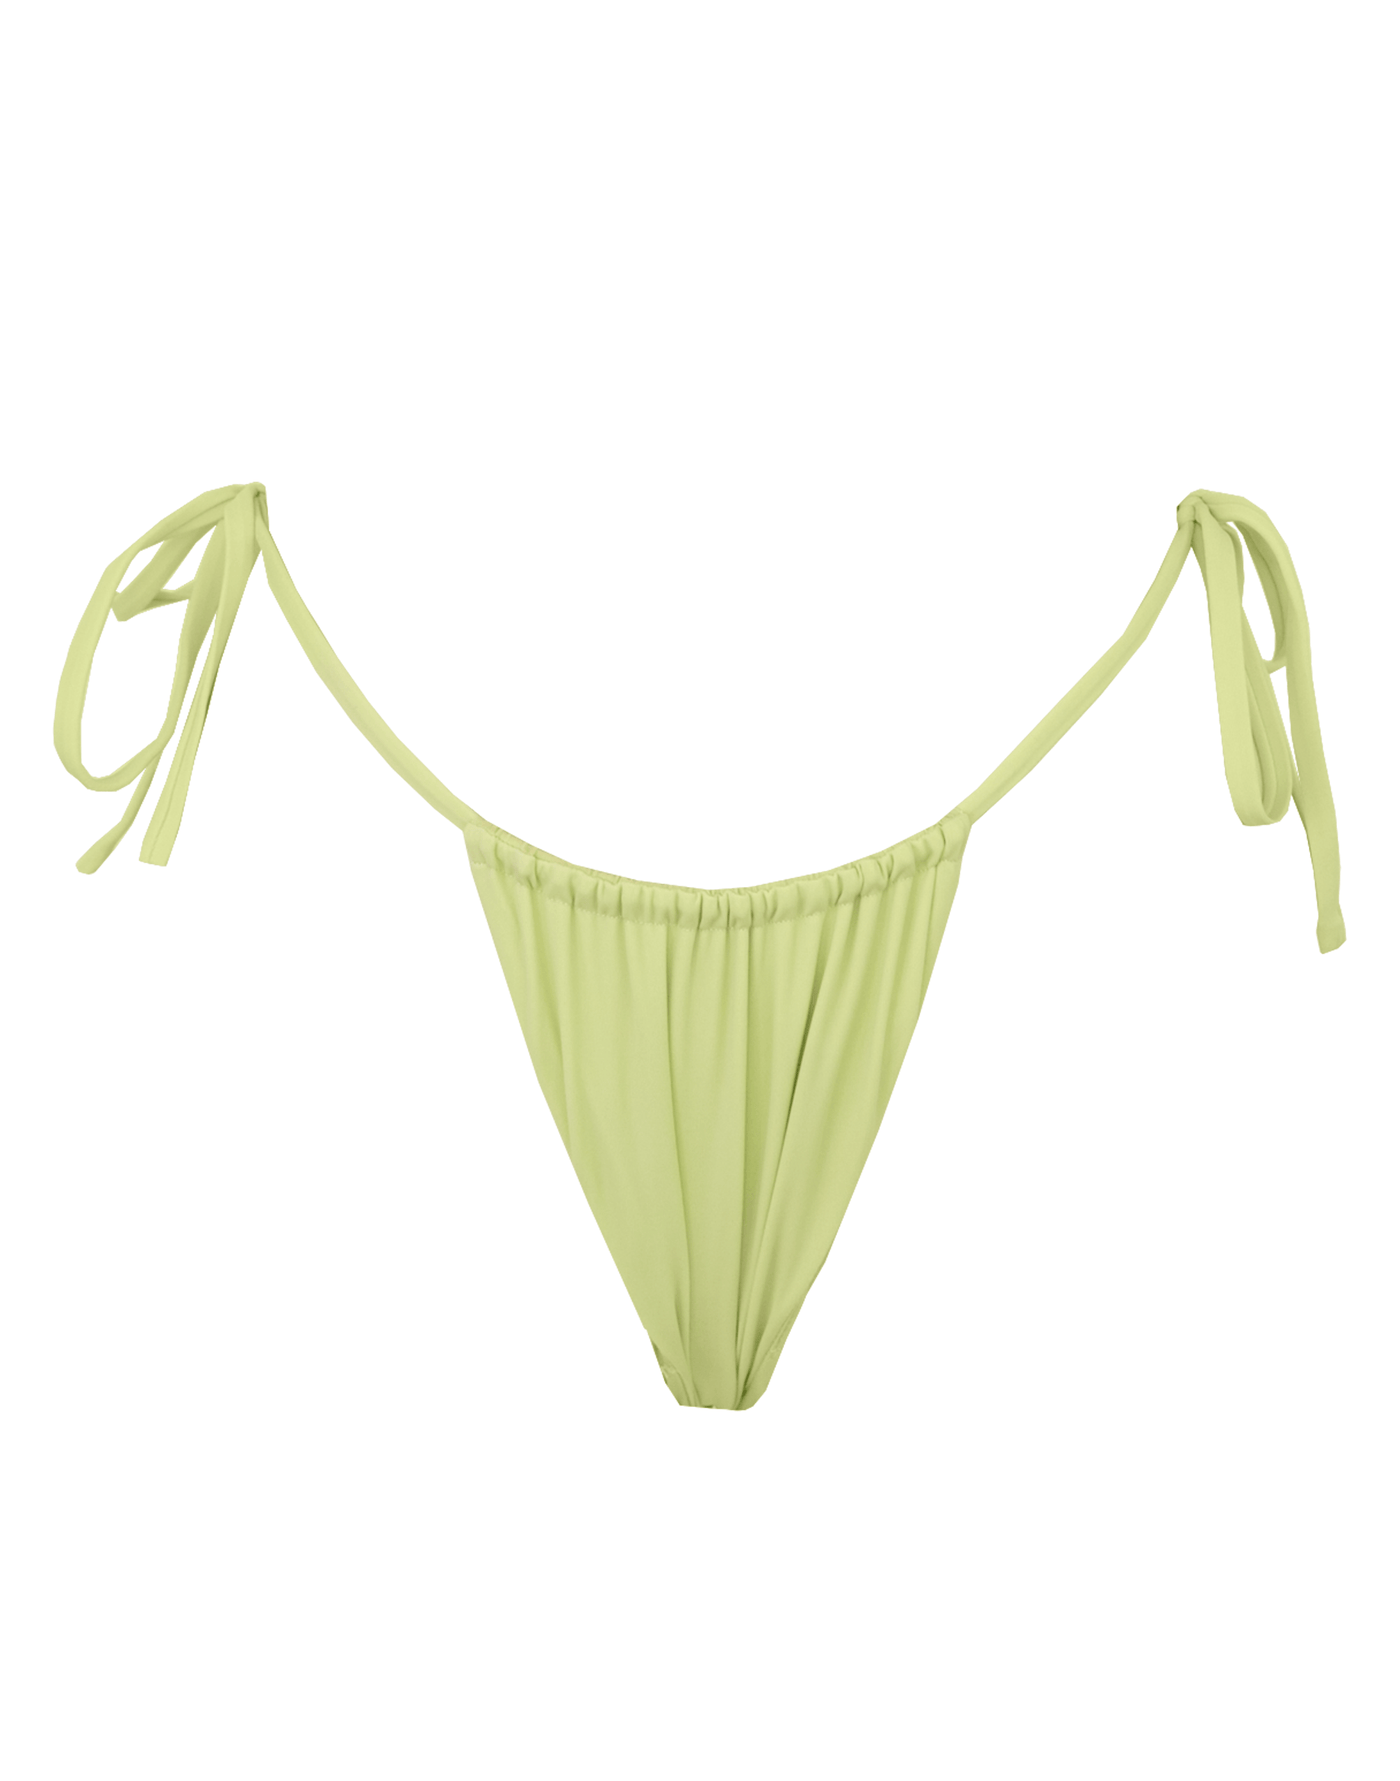 Quartz Side Tie Bottom (Lime) - Lime Green Cheeky Side Tie Bikini Bottom - Women's Swim - Charcoal Clothing mix-and-match